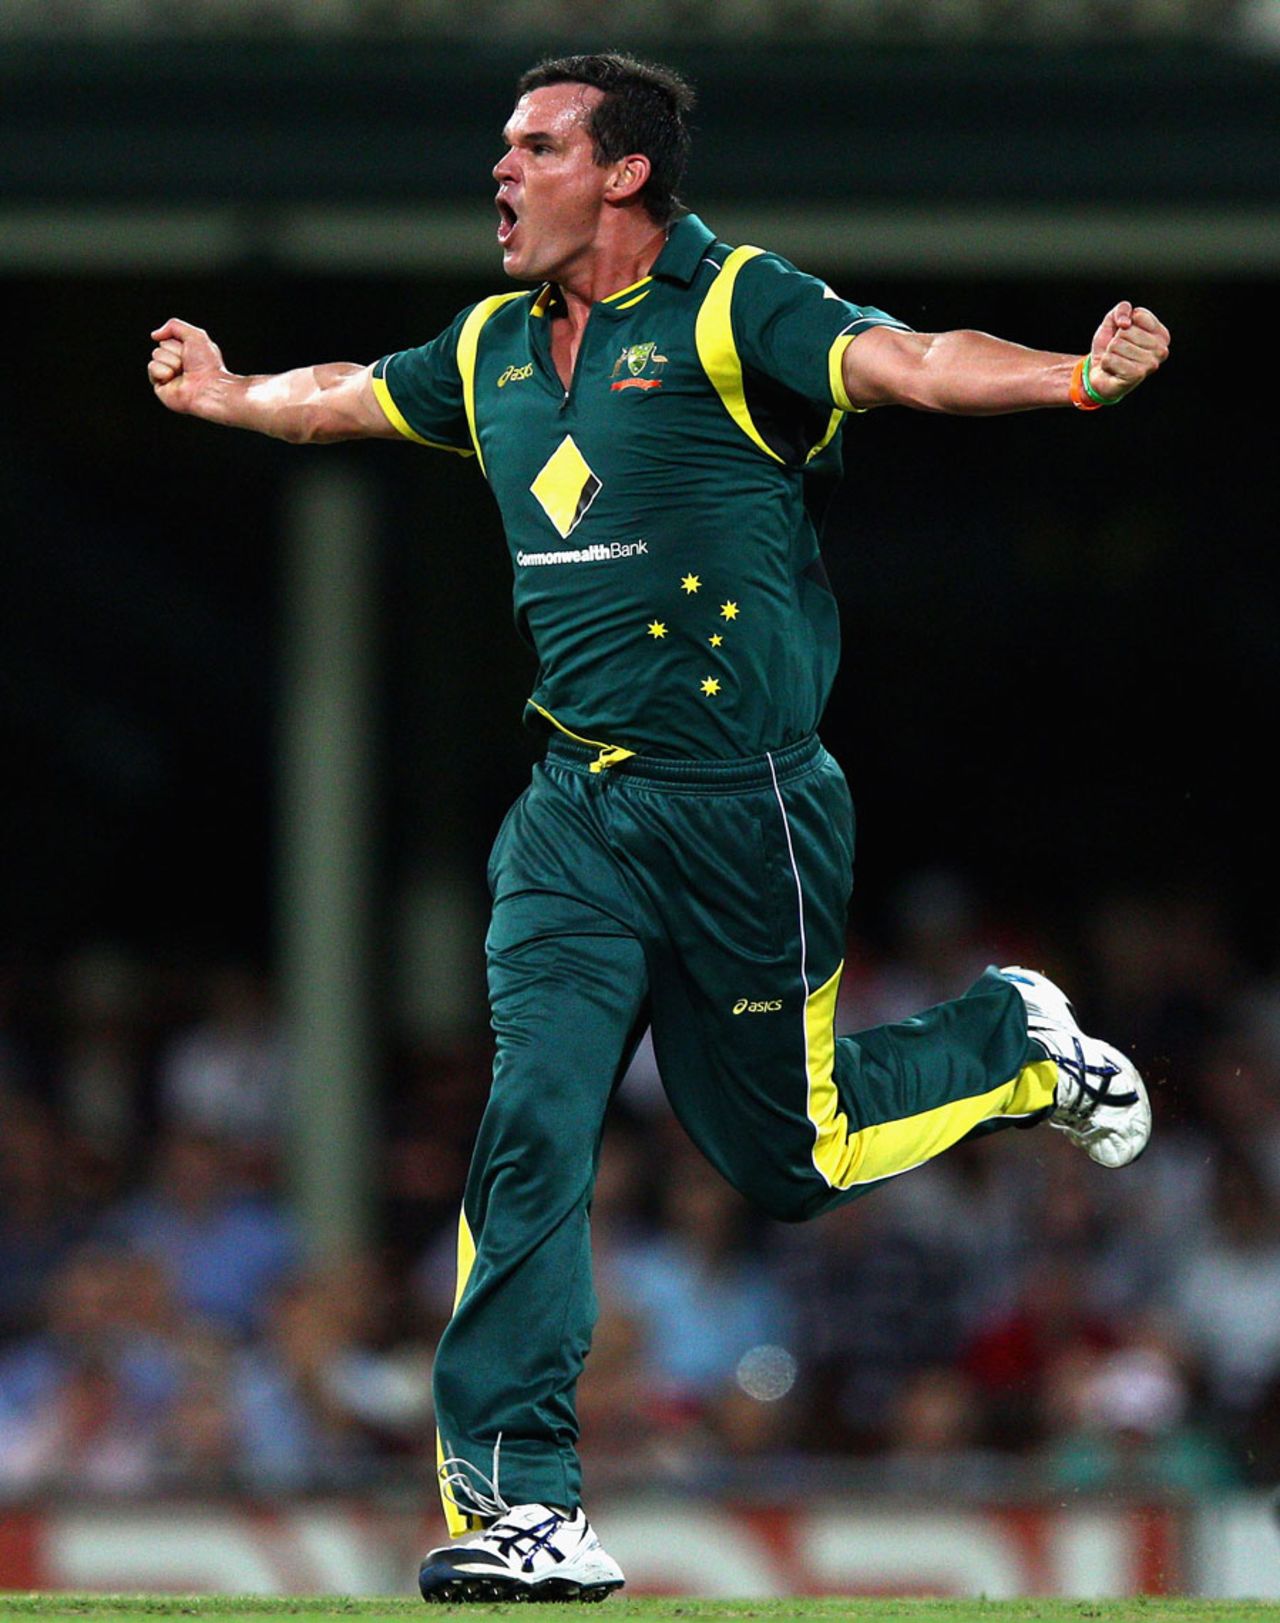 Clint McKay is pumped up after getting rid of Gautam Gambhir, Australia v India, CB Series, Sydney, February 26, 2012